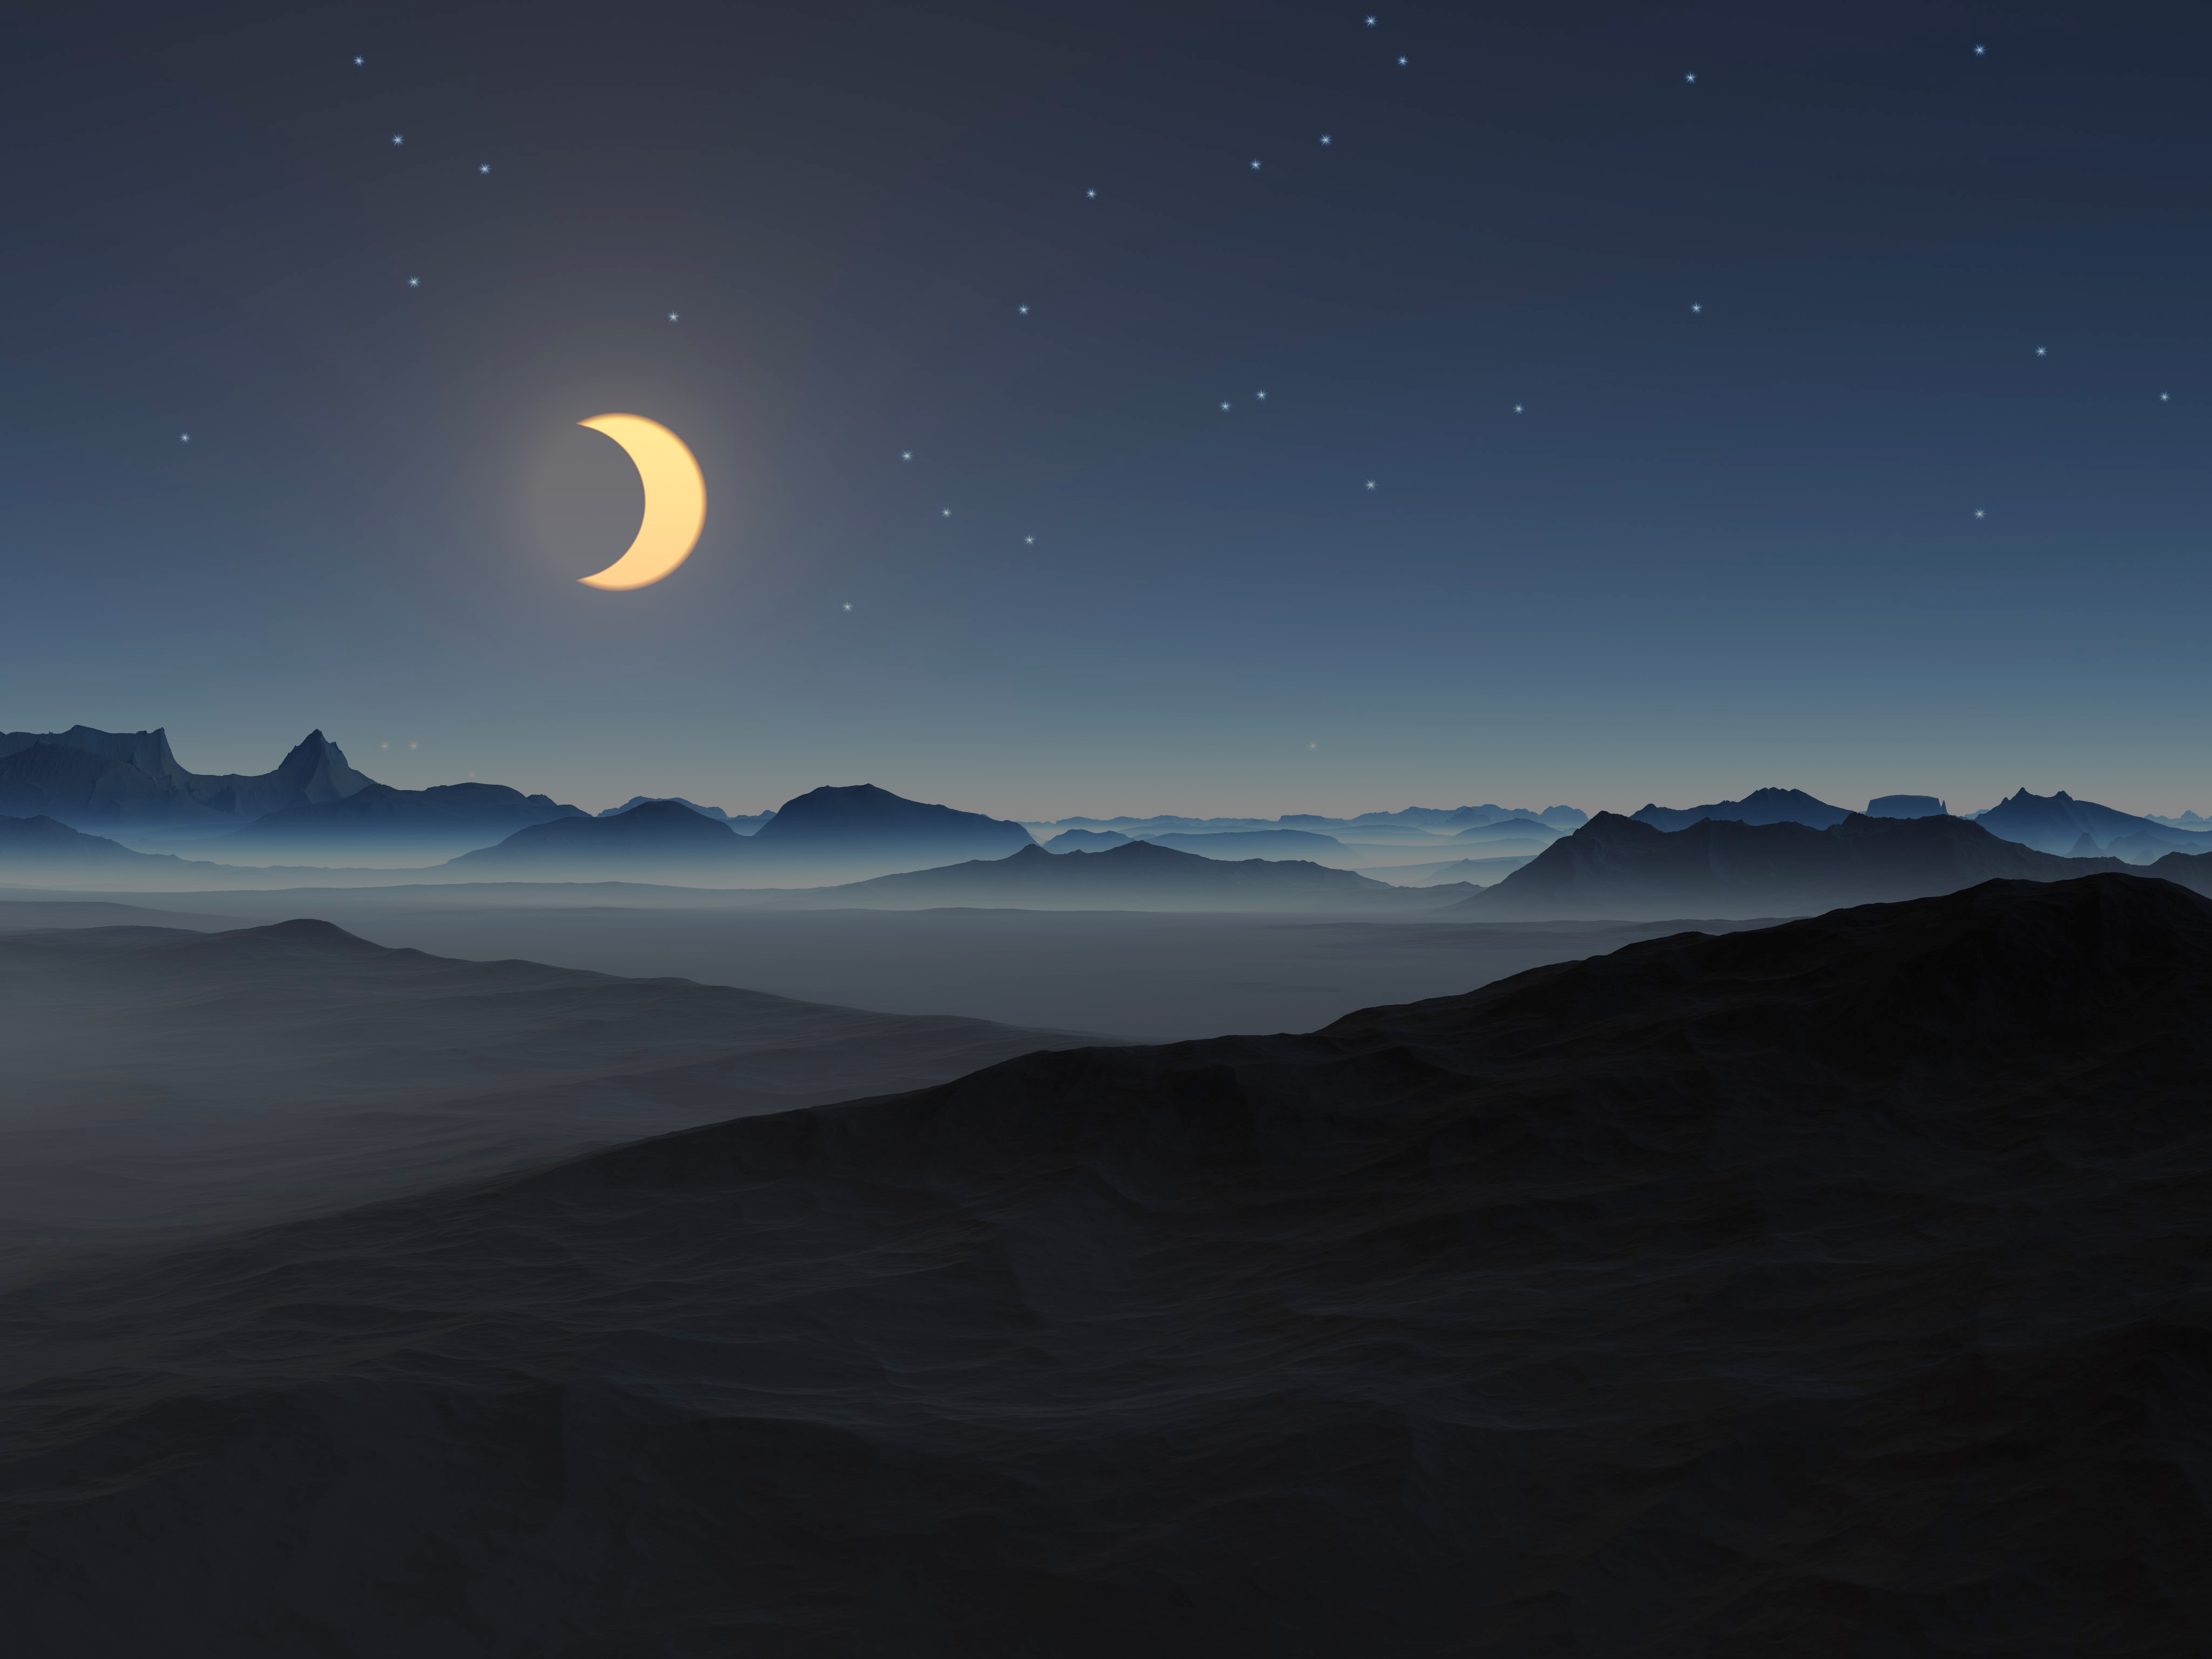 4K Artistic Desert Night Mountains Wallpaper, HD Artist 4K Wallpapers,  Images, Photos and Background - Wallpapers Den